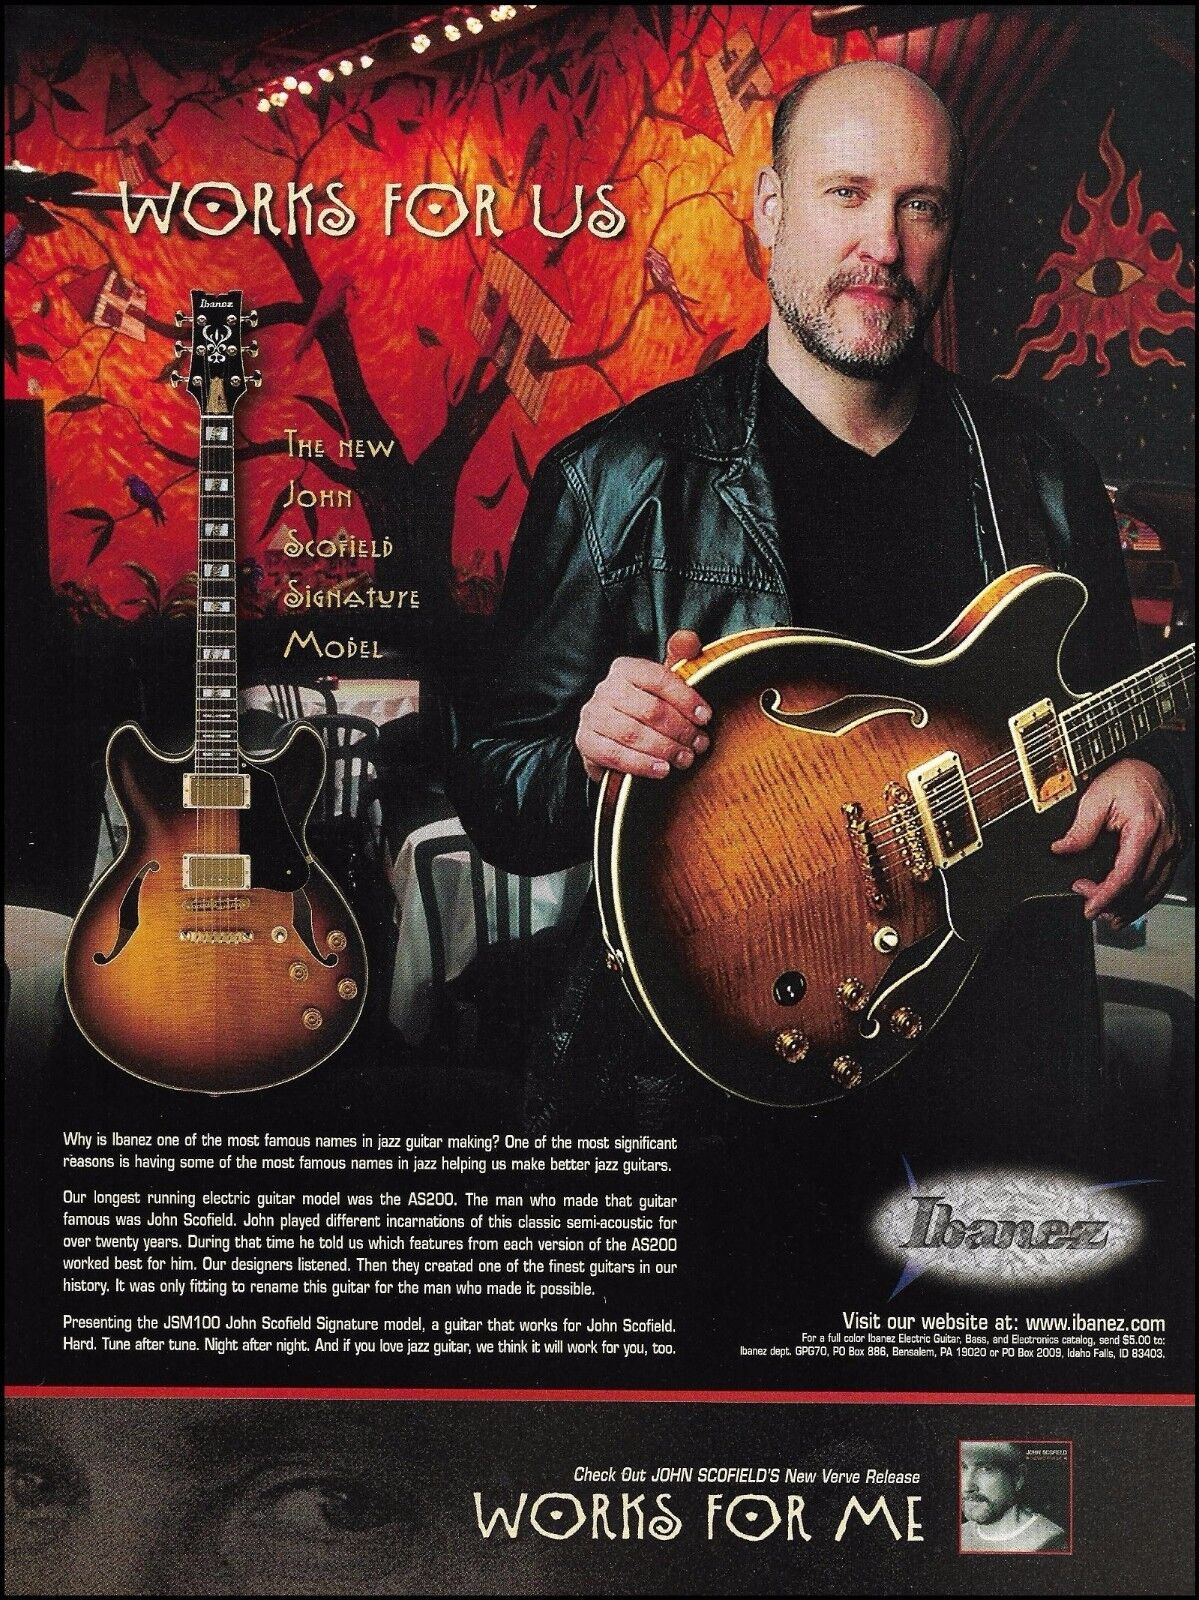 John Scofield Signature Ibanez Model JSM100 guitar ad 2001 advertisement print